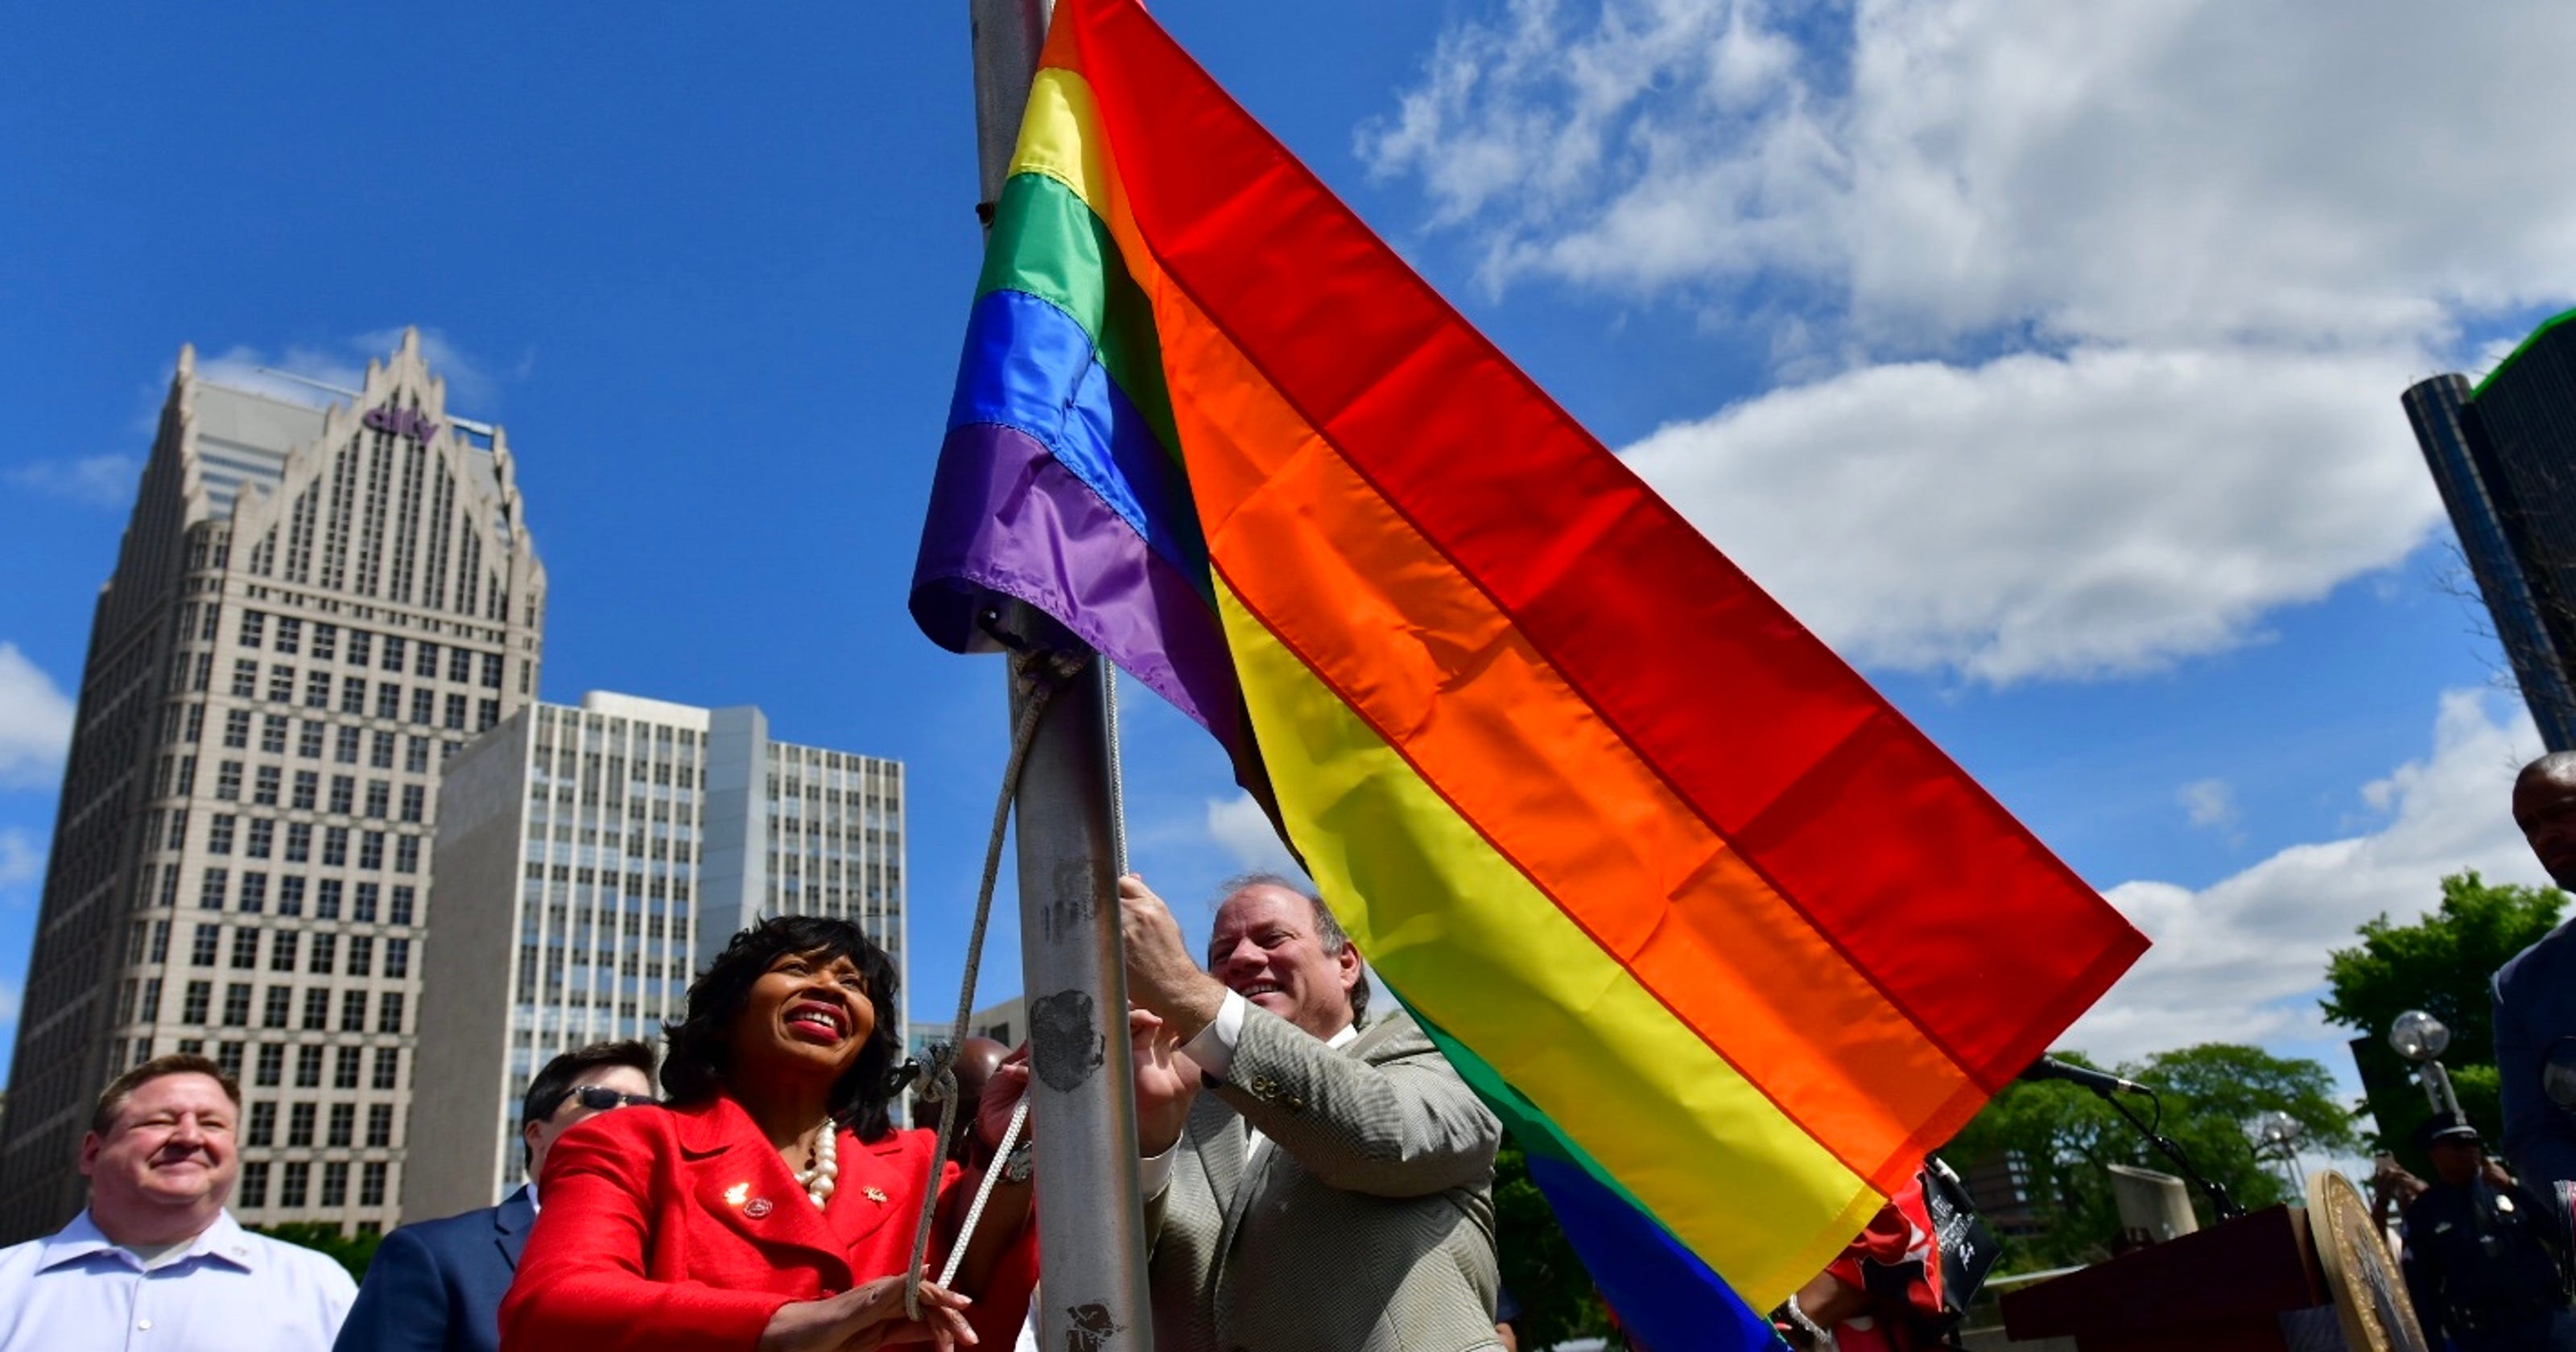 Detroit officials raise LGBT awareness with rainbow flag